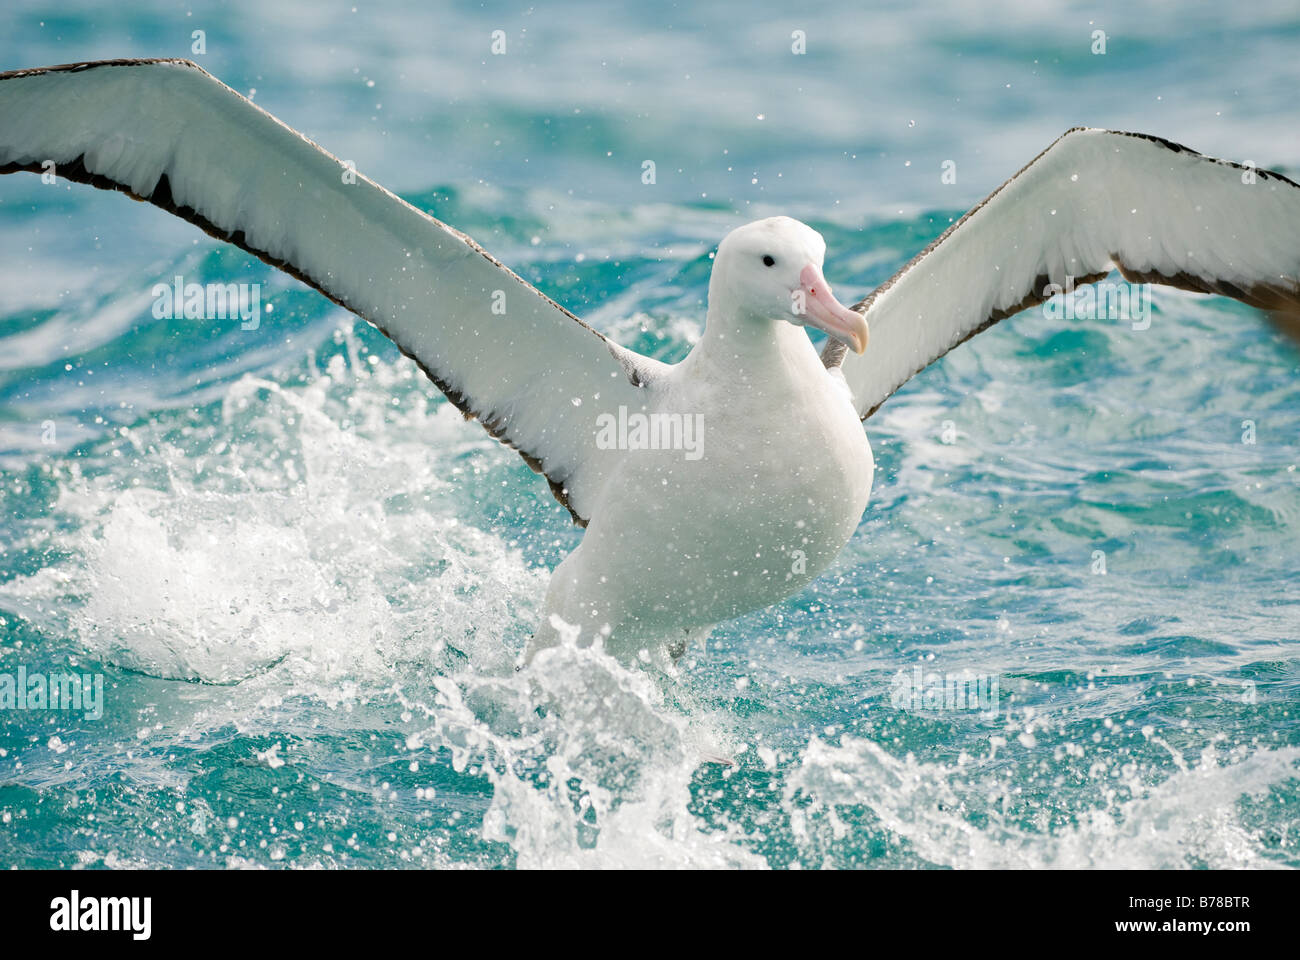 Southern Royal albatross (Diomedea epomophora) in flight, Kaikoura, New Zealand Stock Photo